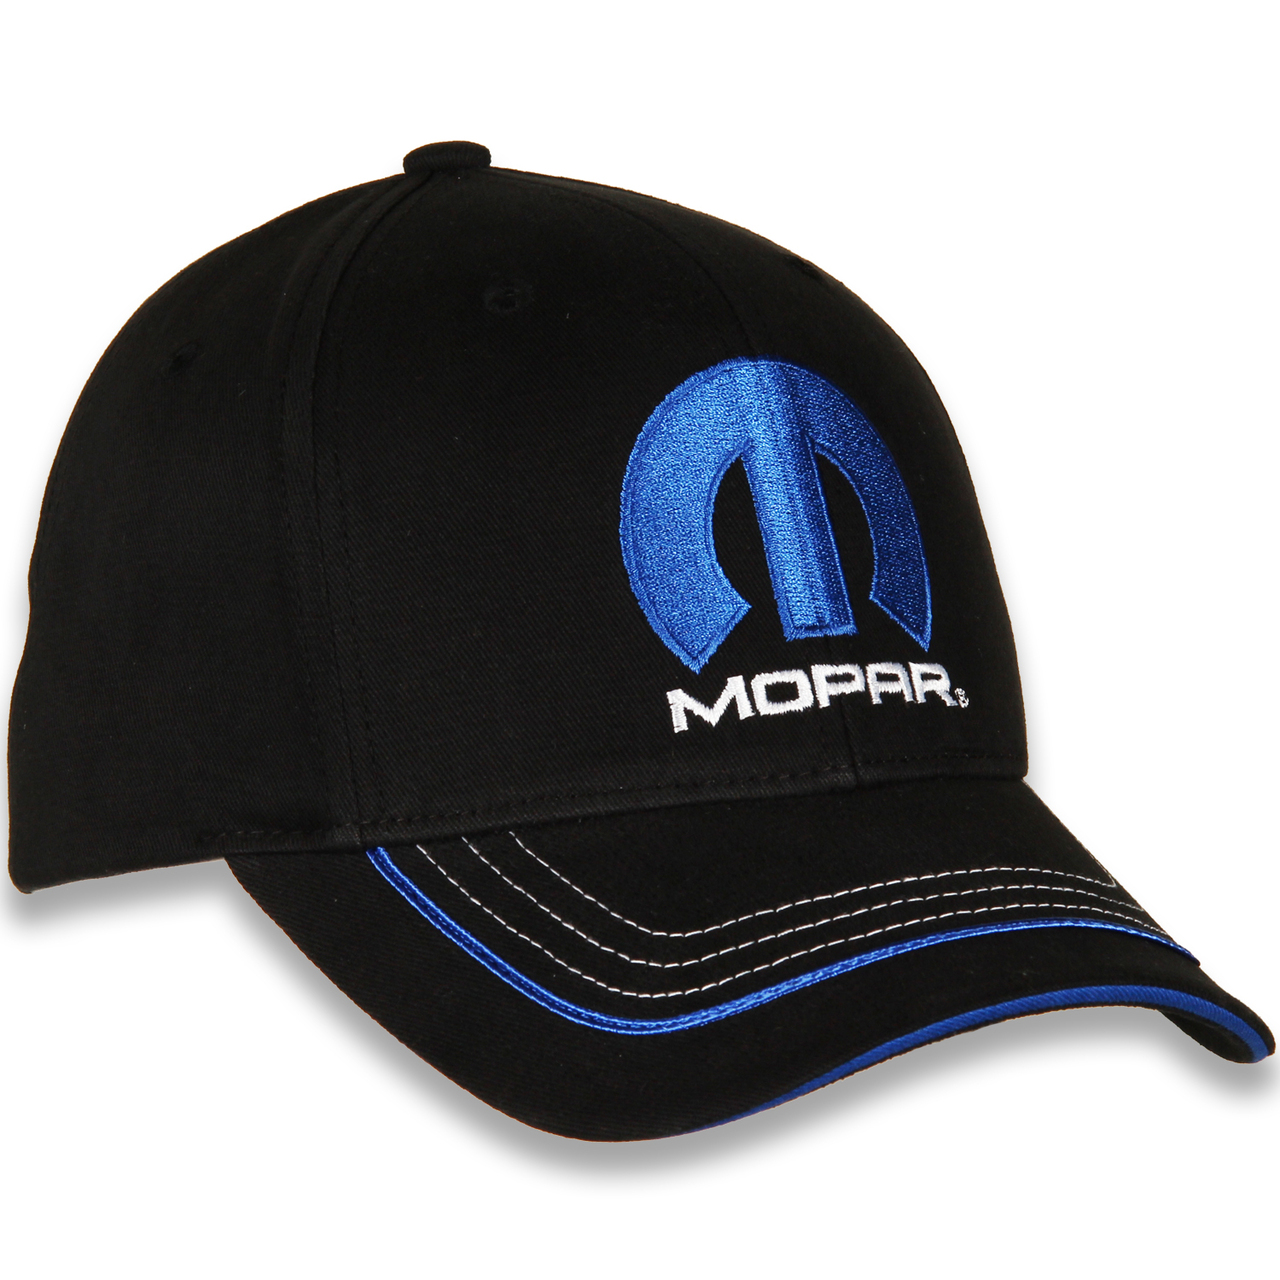 Mopar Logo Brushed Cotton Hat - Black/Royal Blue/White